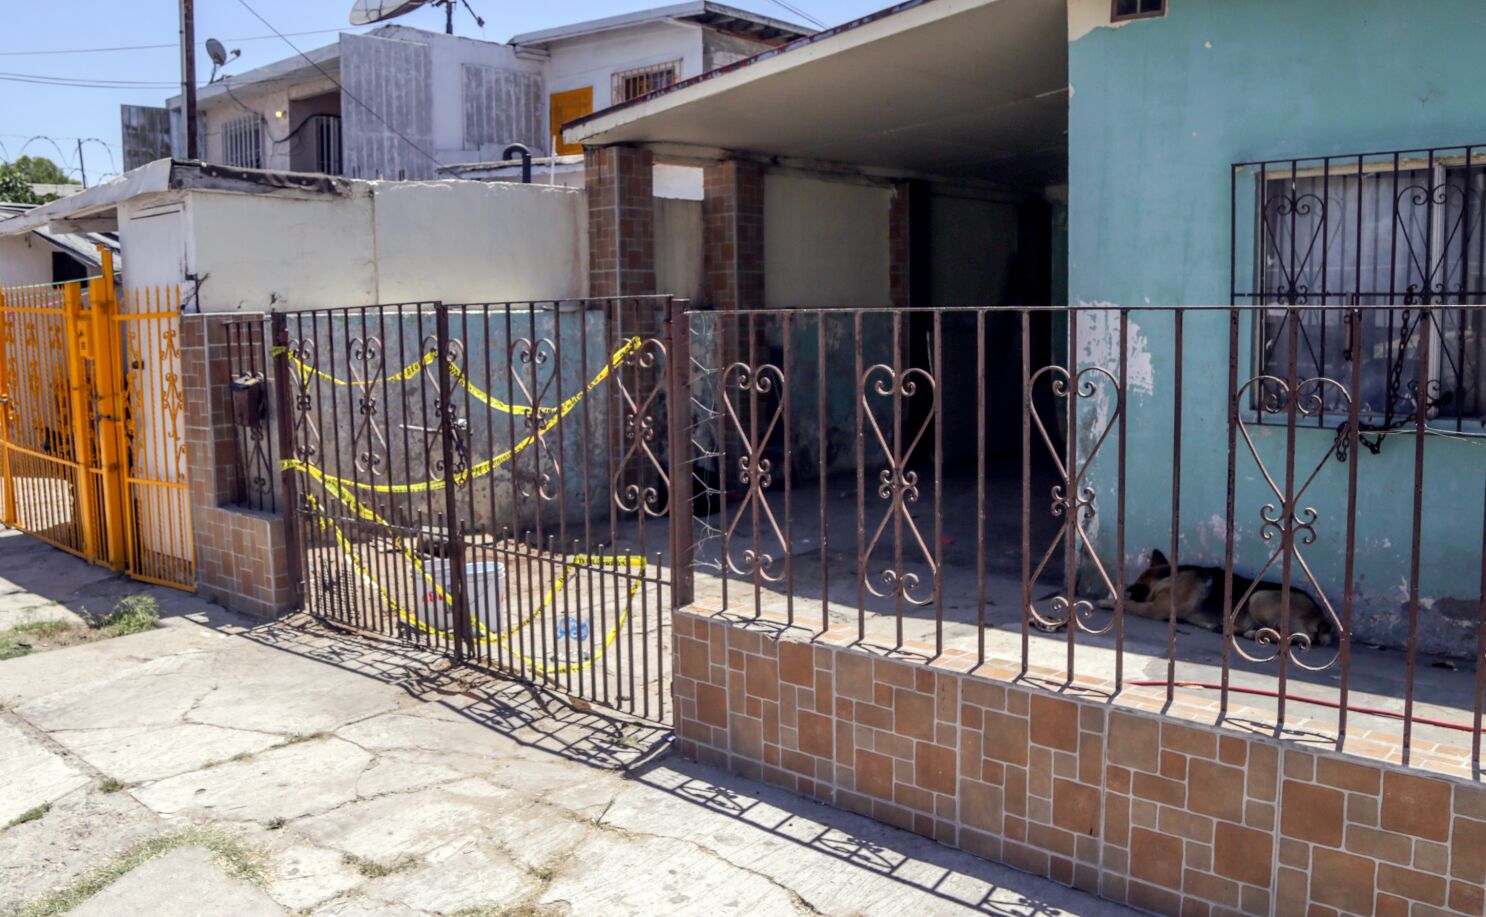 Casa en barrio de Tijuana fue pantalla para un narcotúnel México-Estados  Unidos - San Diego Union-Tribune en Español